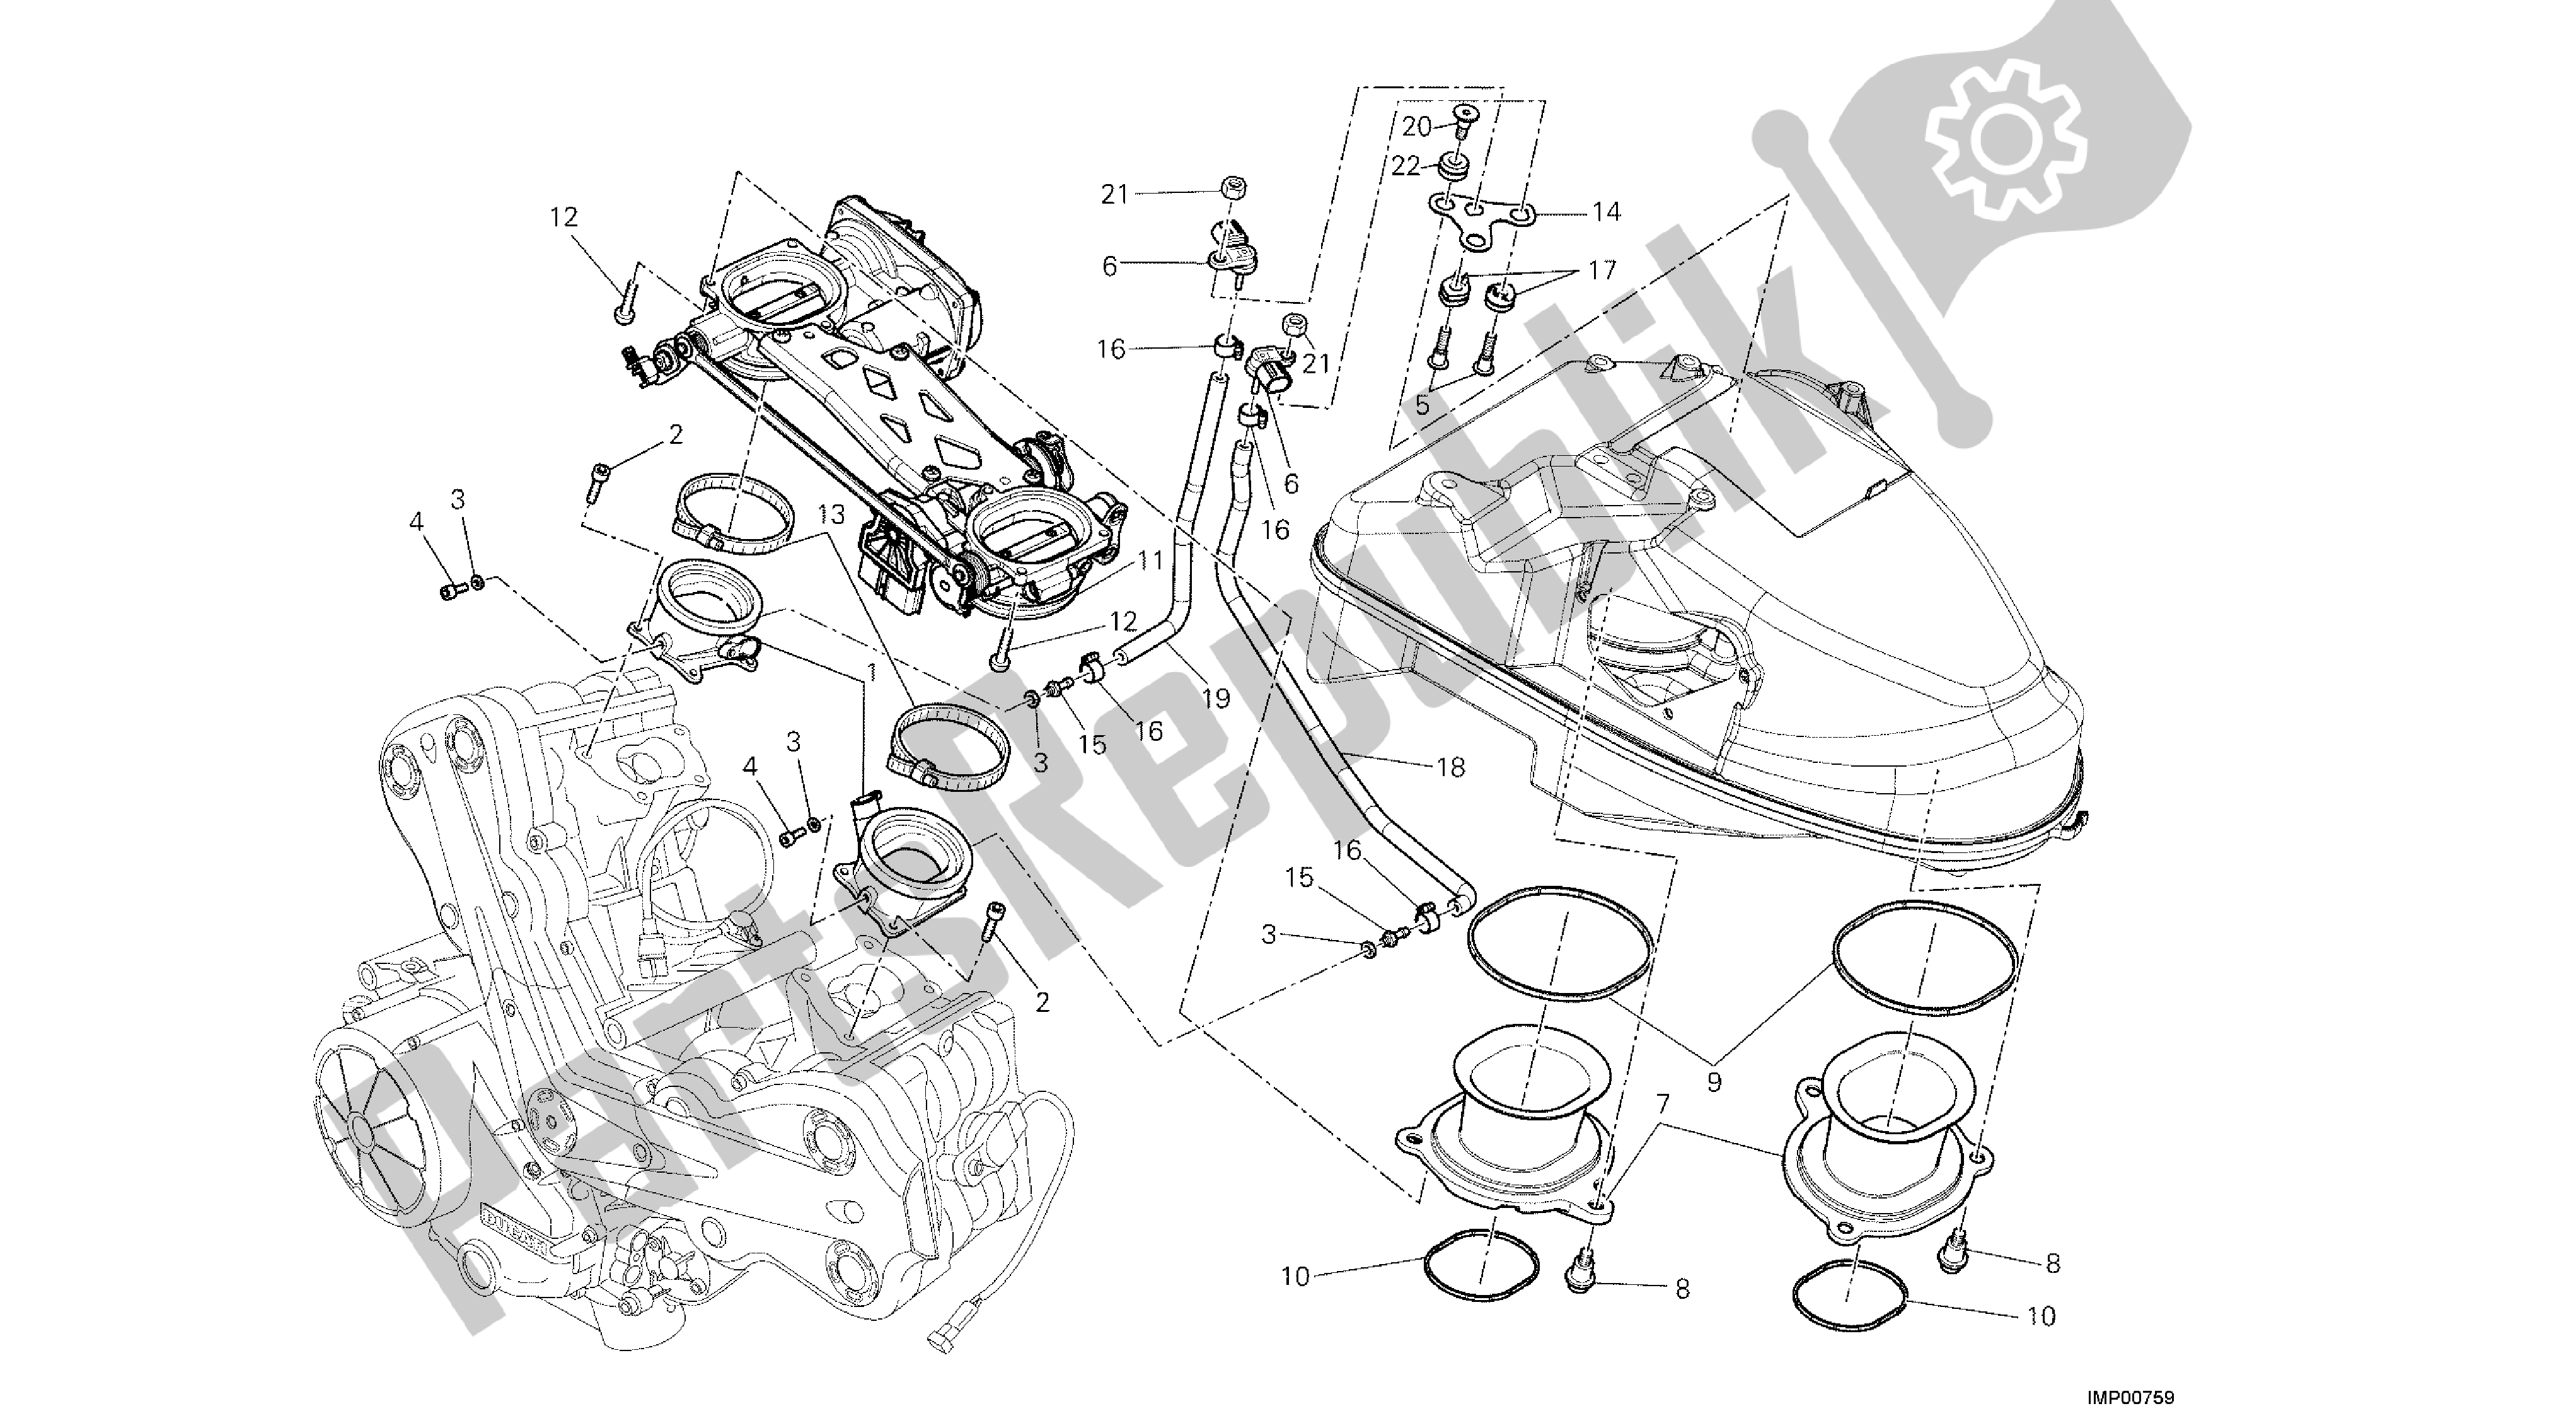 Todas las partes para Dibujo 017 - Cuerpo Del Acelerador [mod: Dvl; Xst: Aus, B Ra, Eur, Fra, Jap] Grupo Engi Ne de Ducati Diavel 1200 2013